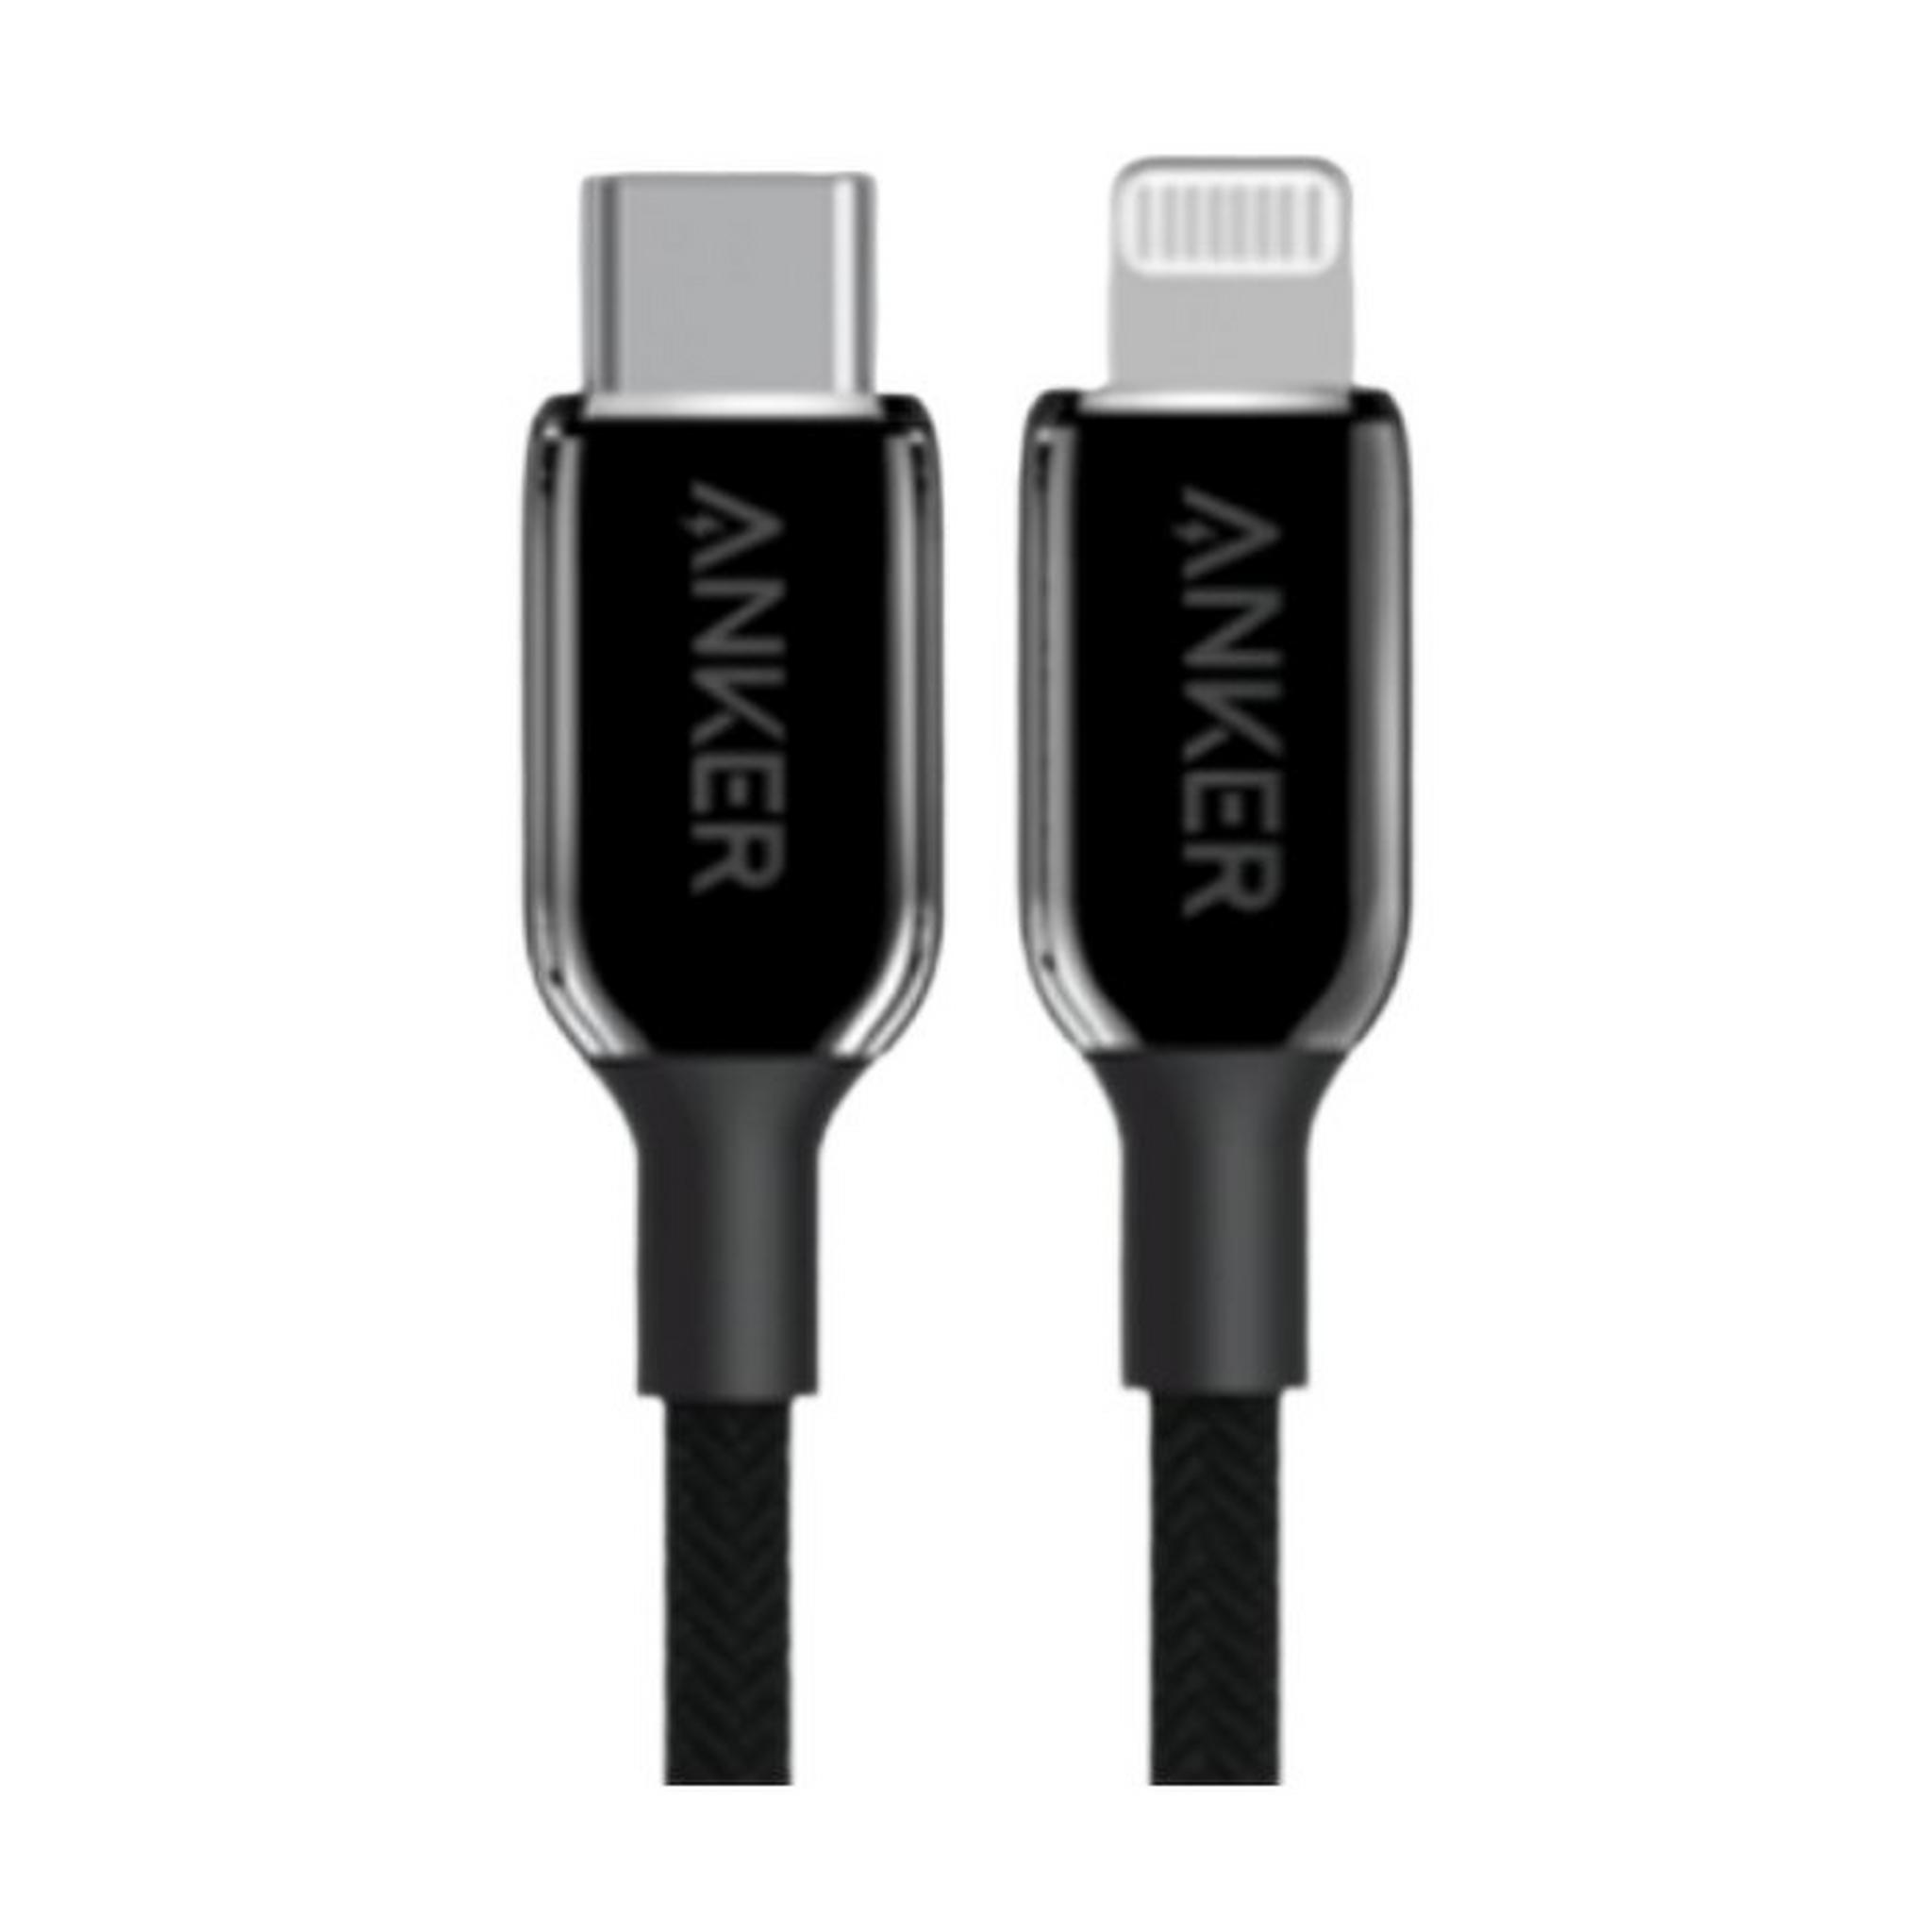 Anker PowerLine+ III lightning USB Cable 0.9m - Black